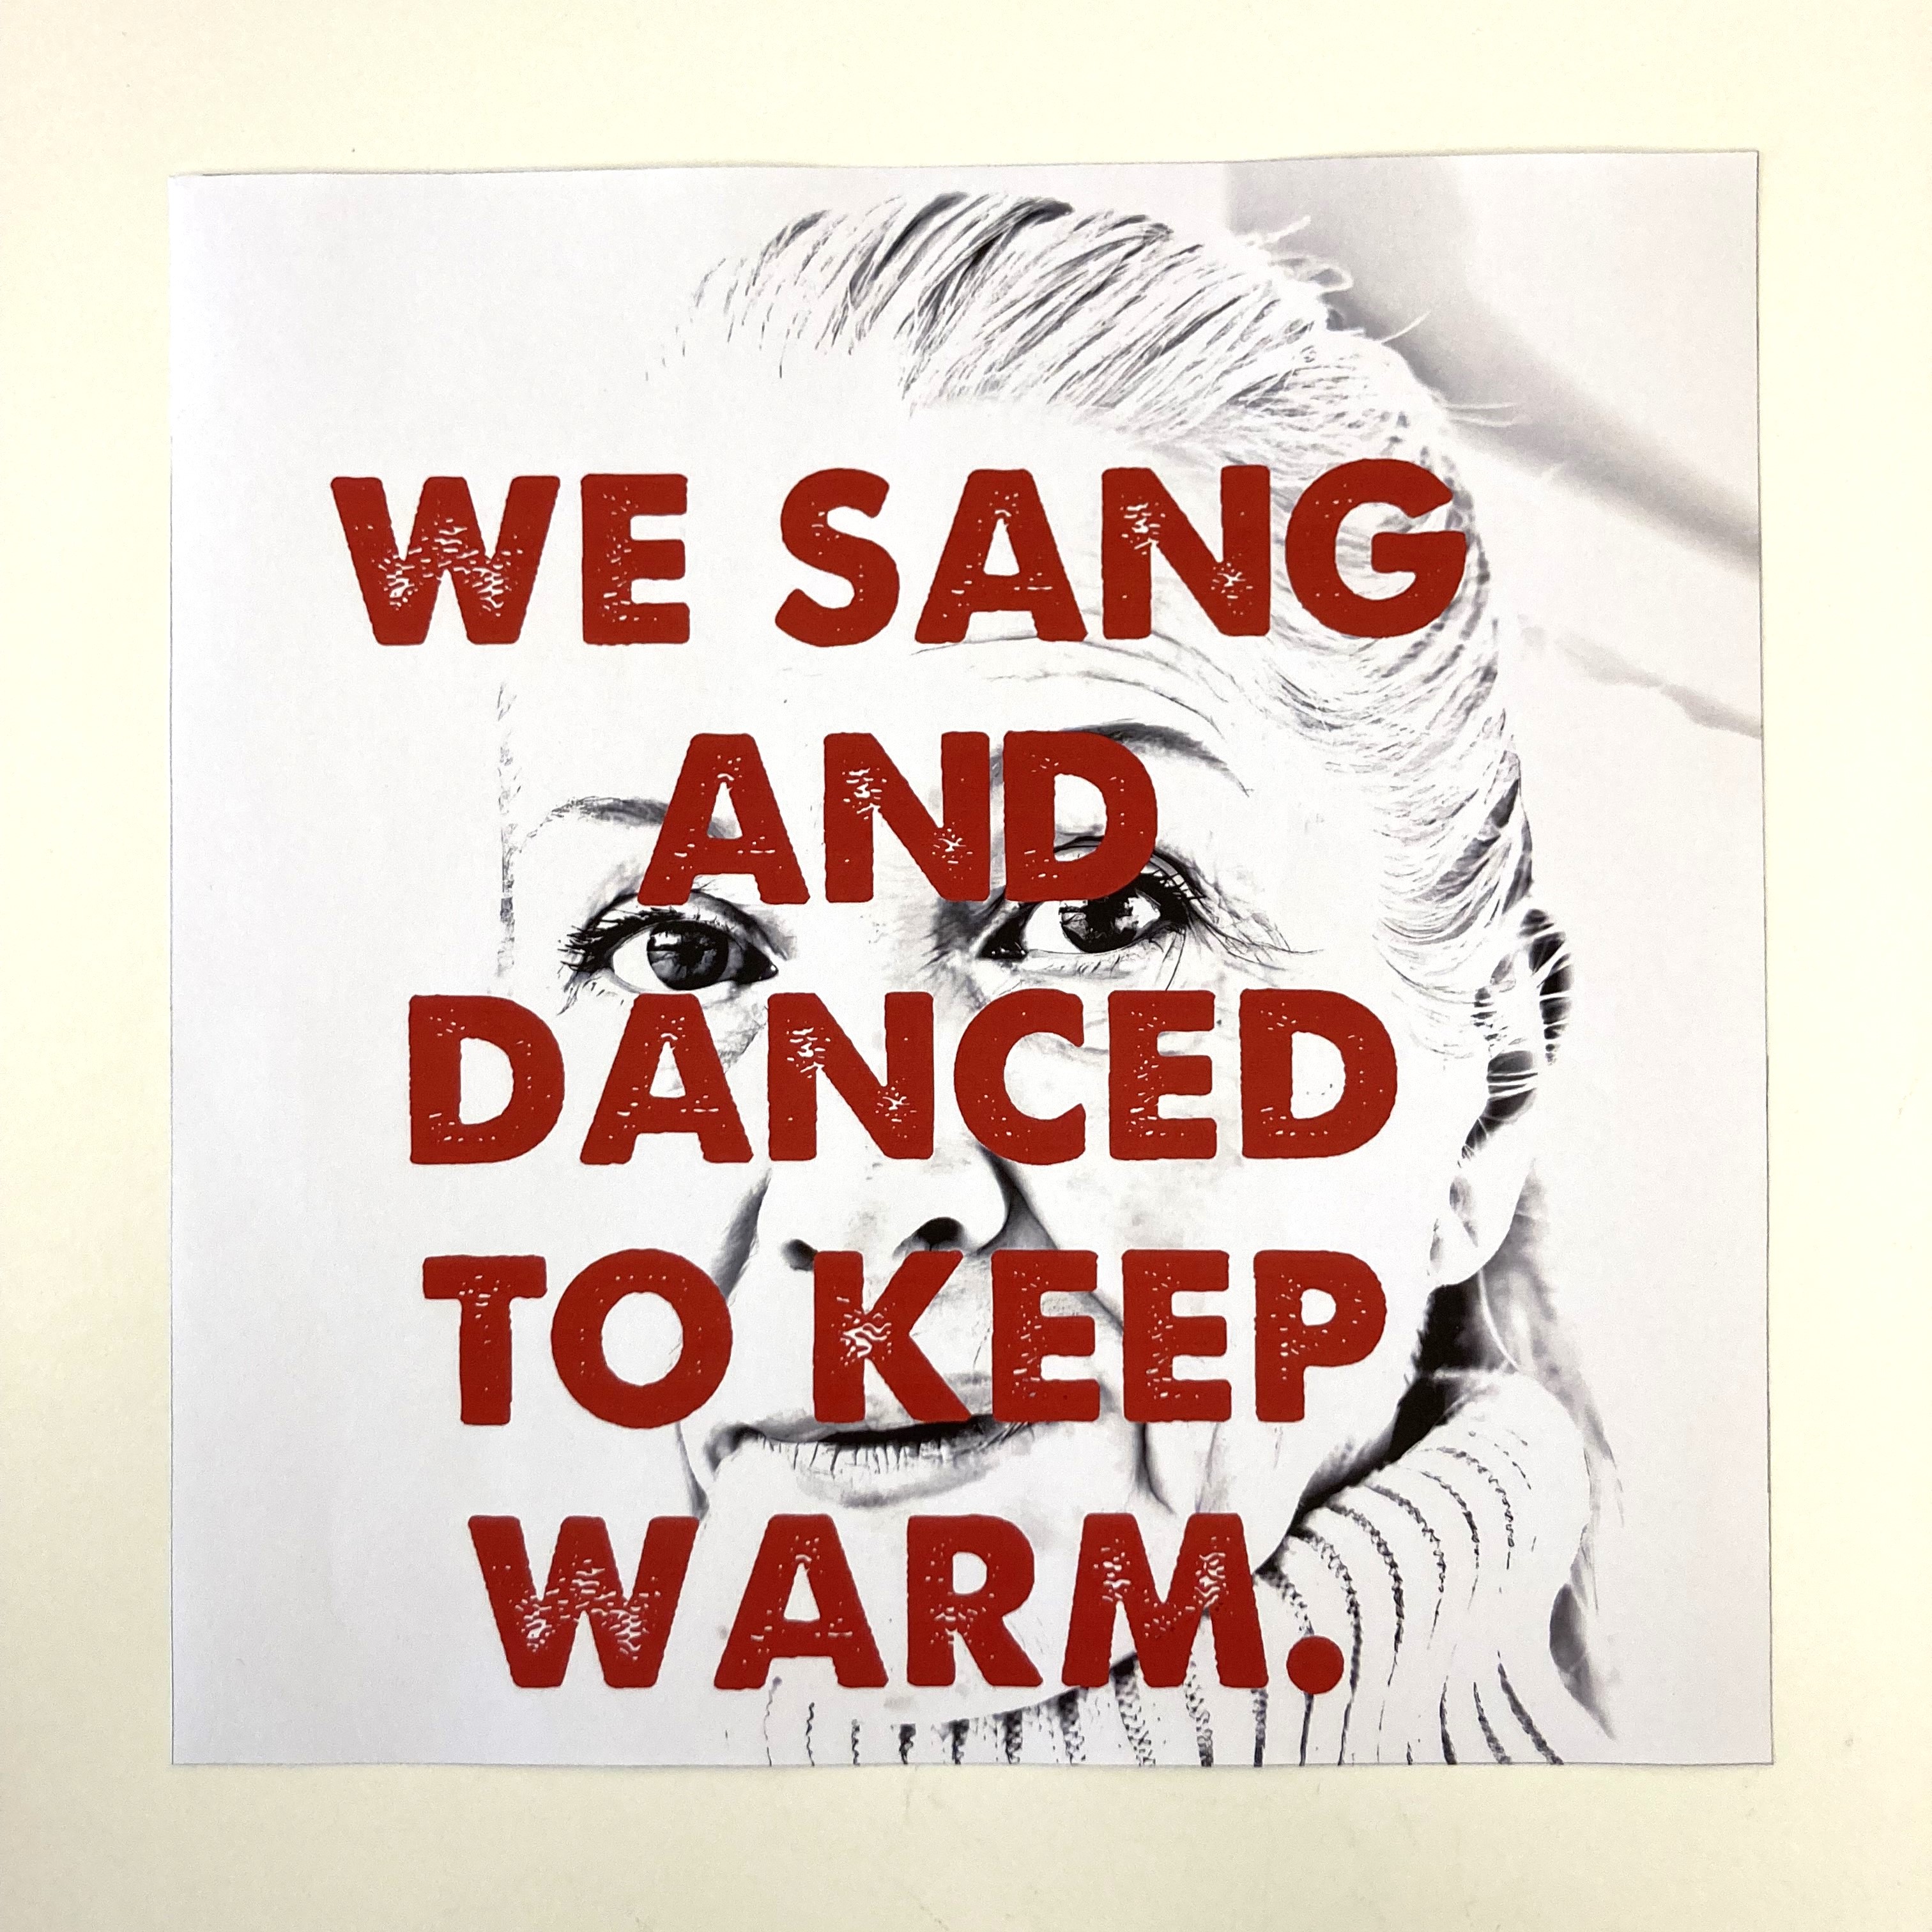 We sang and danced to keep warm